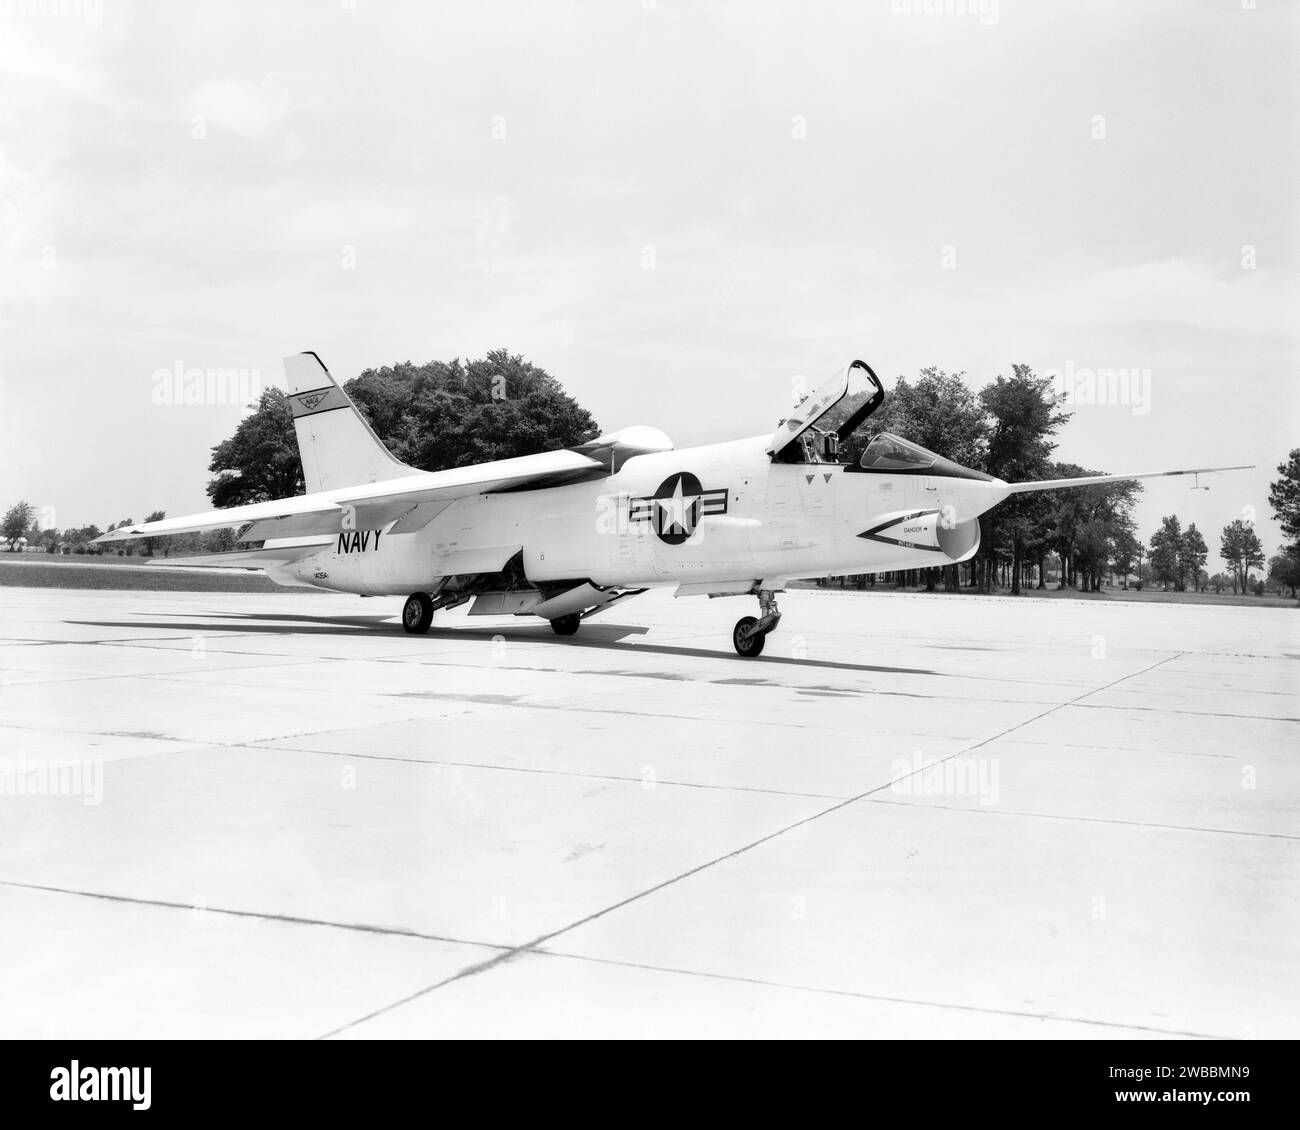 F-8U Crusader Military Aircraft, NASA Langley Research Center, Hampton, Virginia, USA, National Advisory Committee for Aeronautics, 1957 Stockfoto